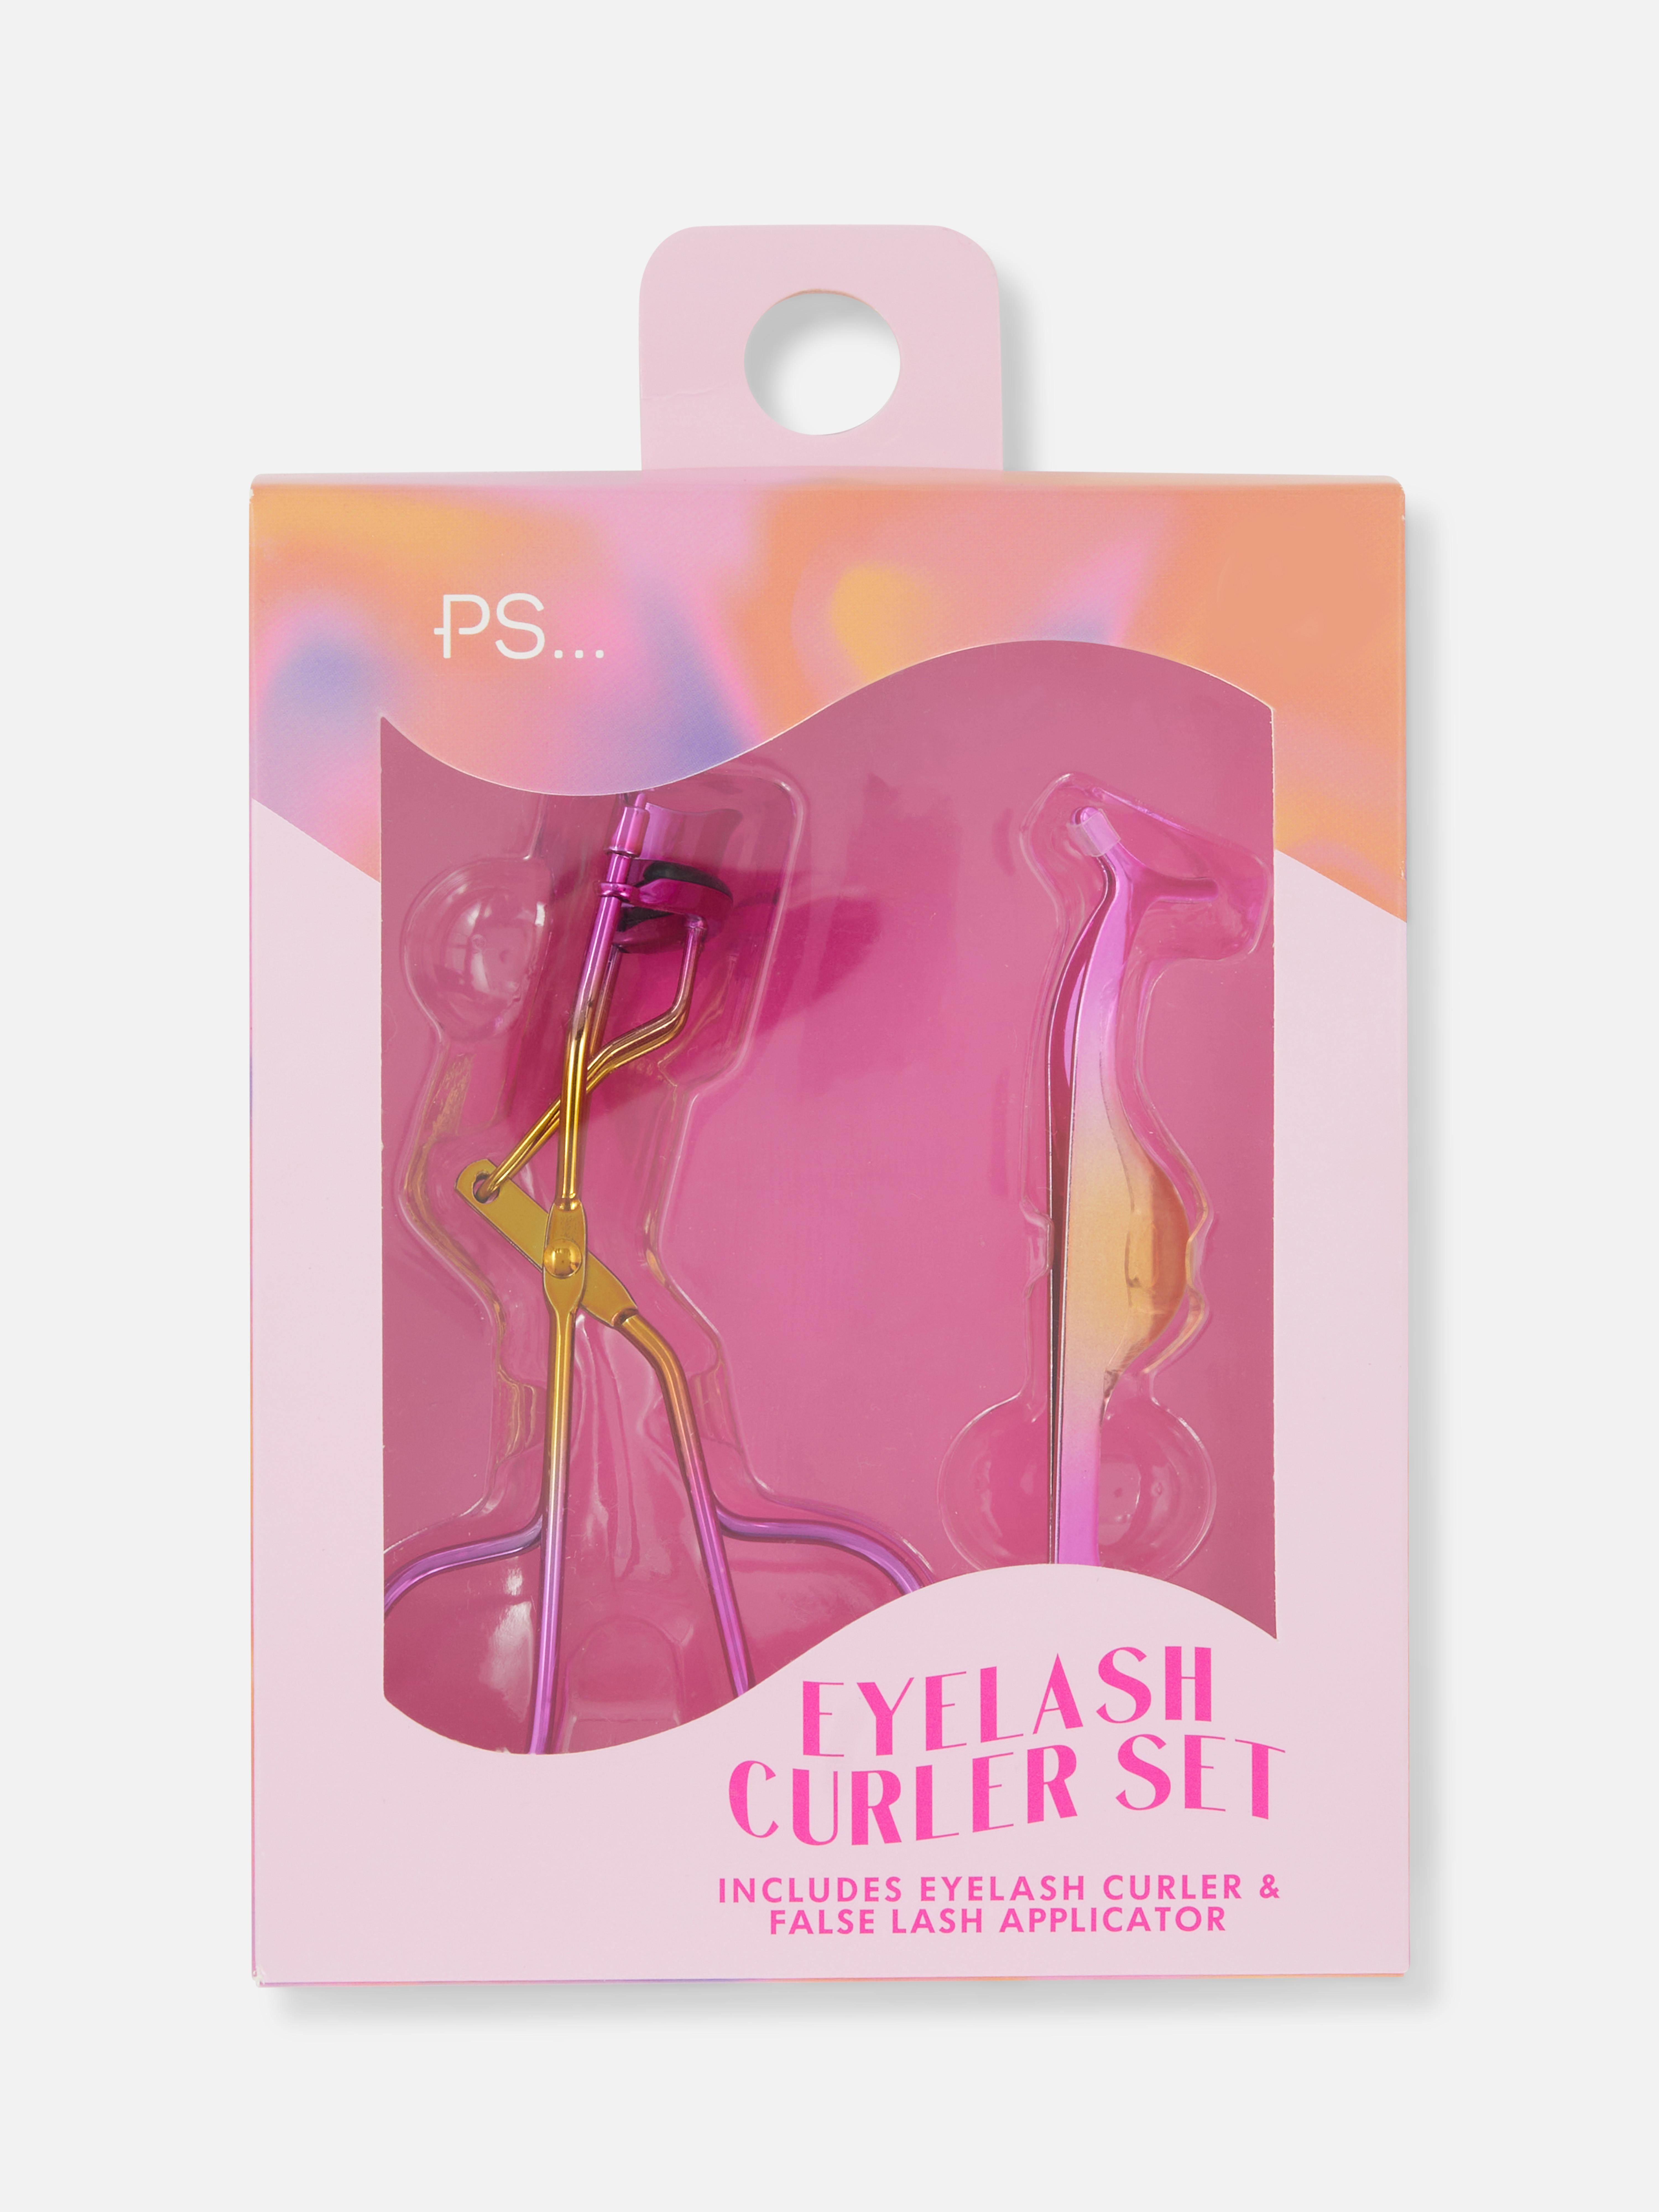 PS… Eyelash Curler Set